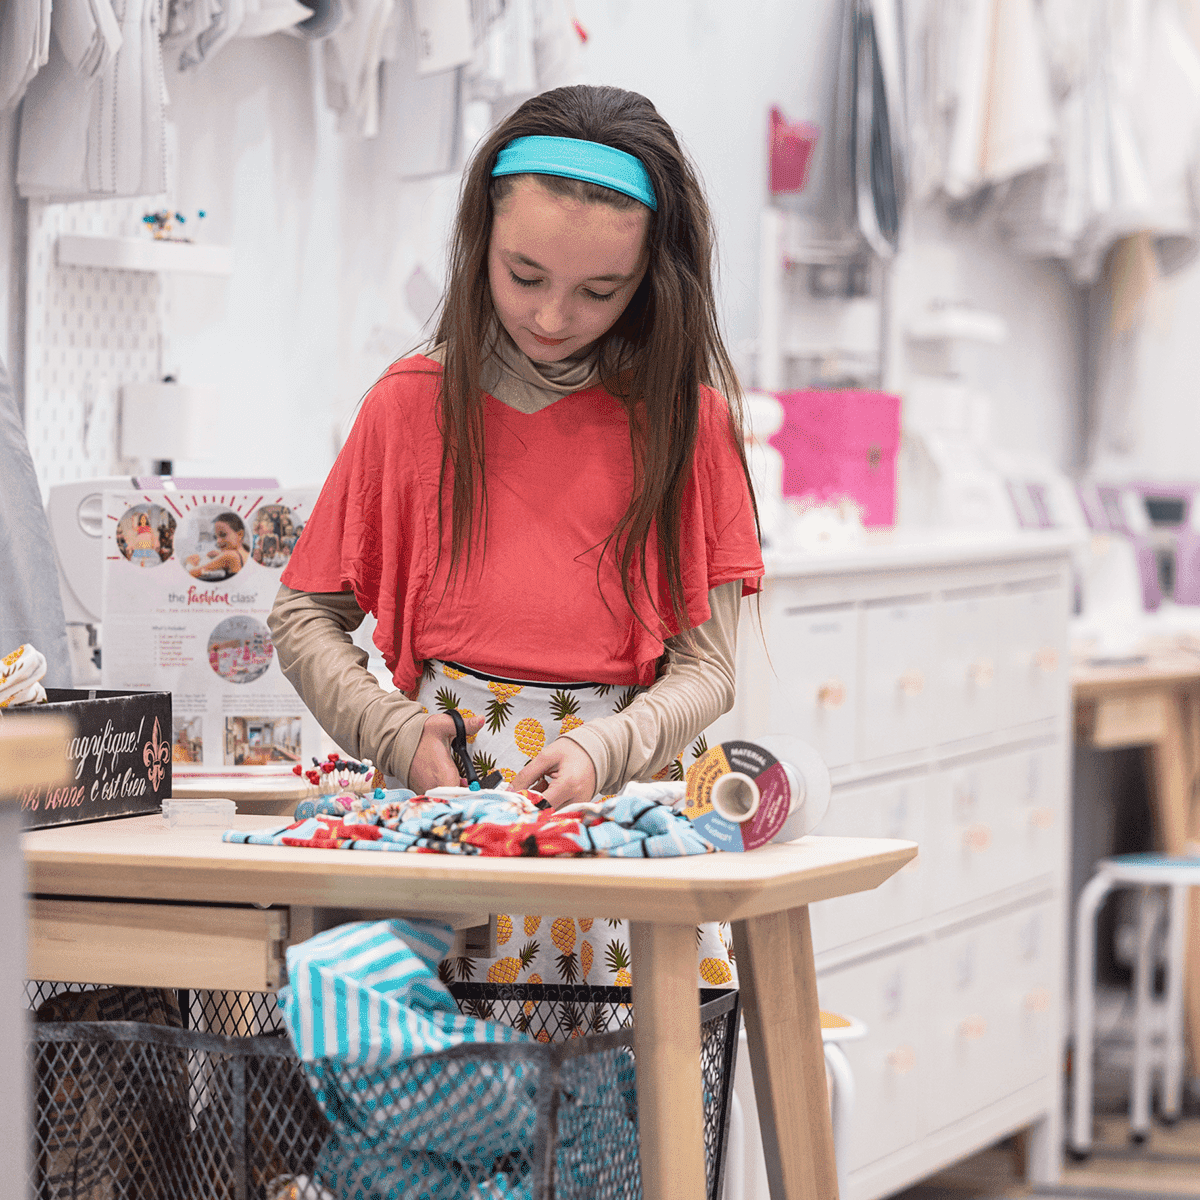 Girl cutting fabric to sew a custom dress